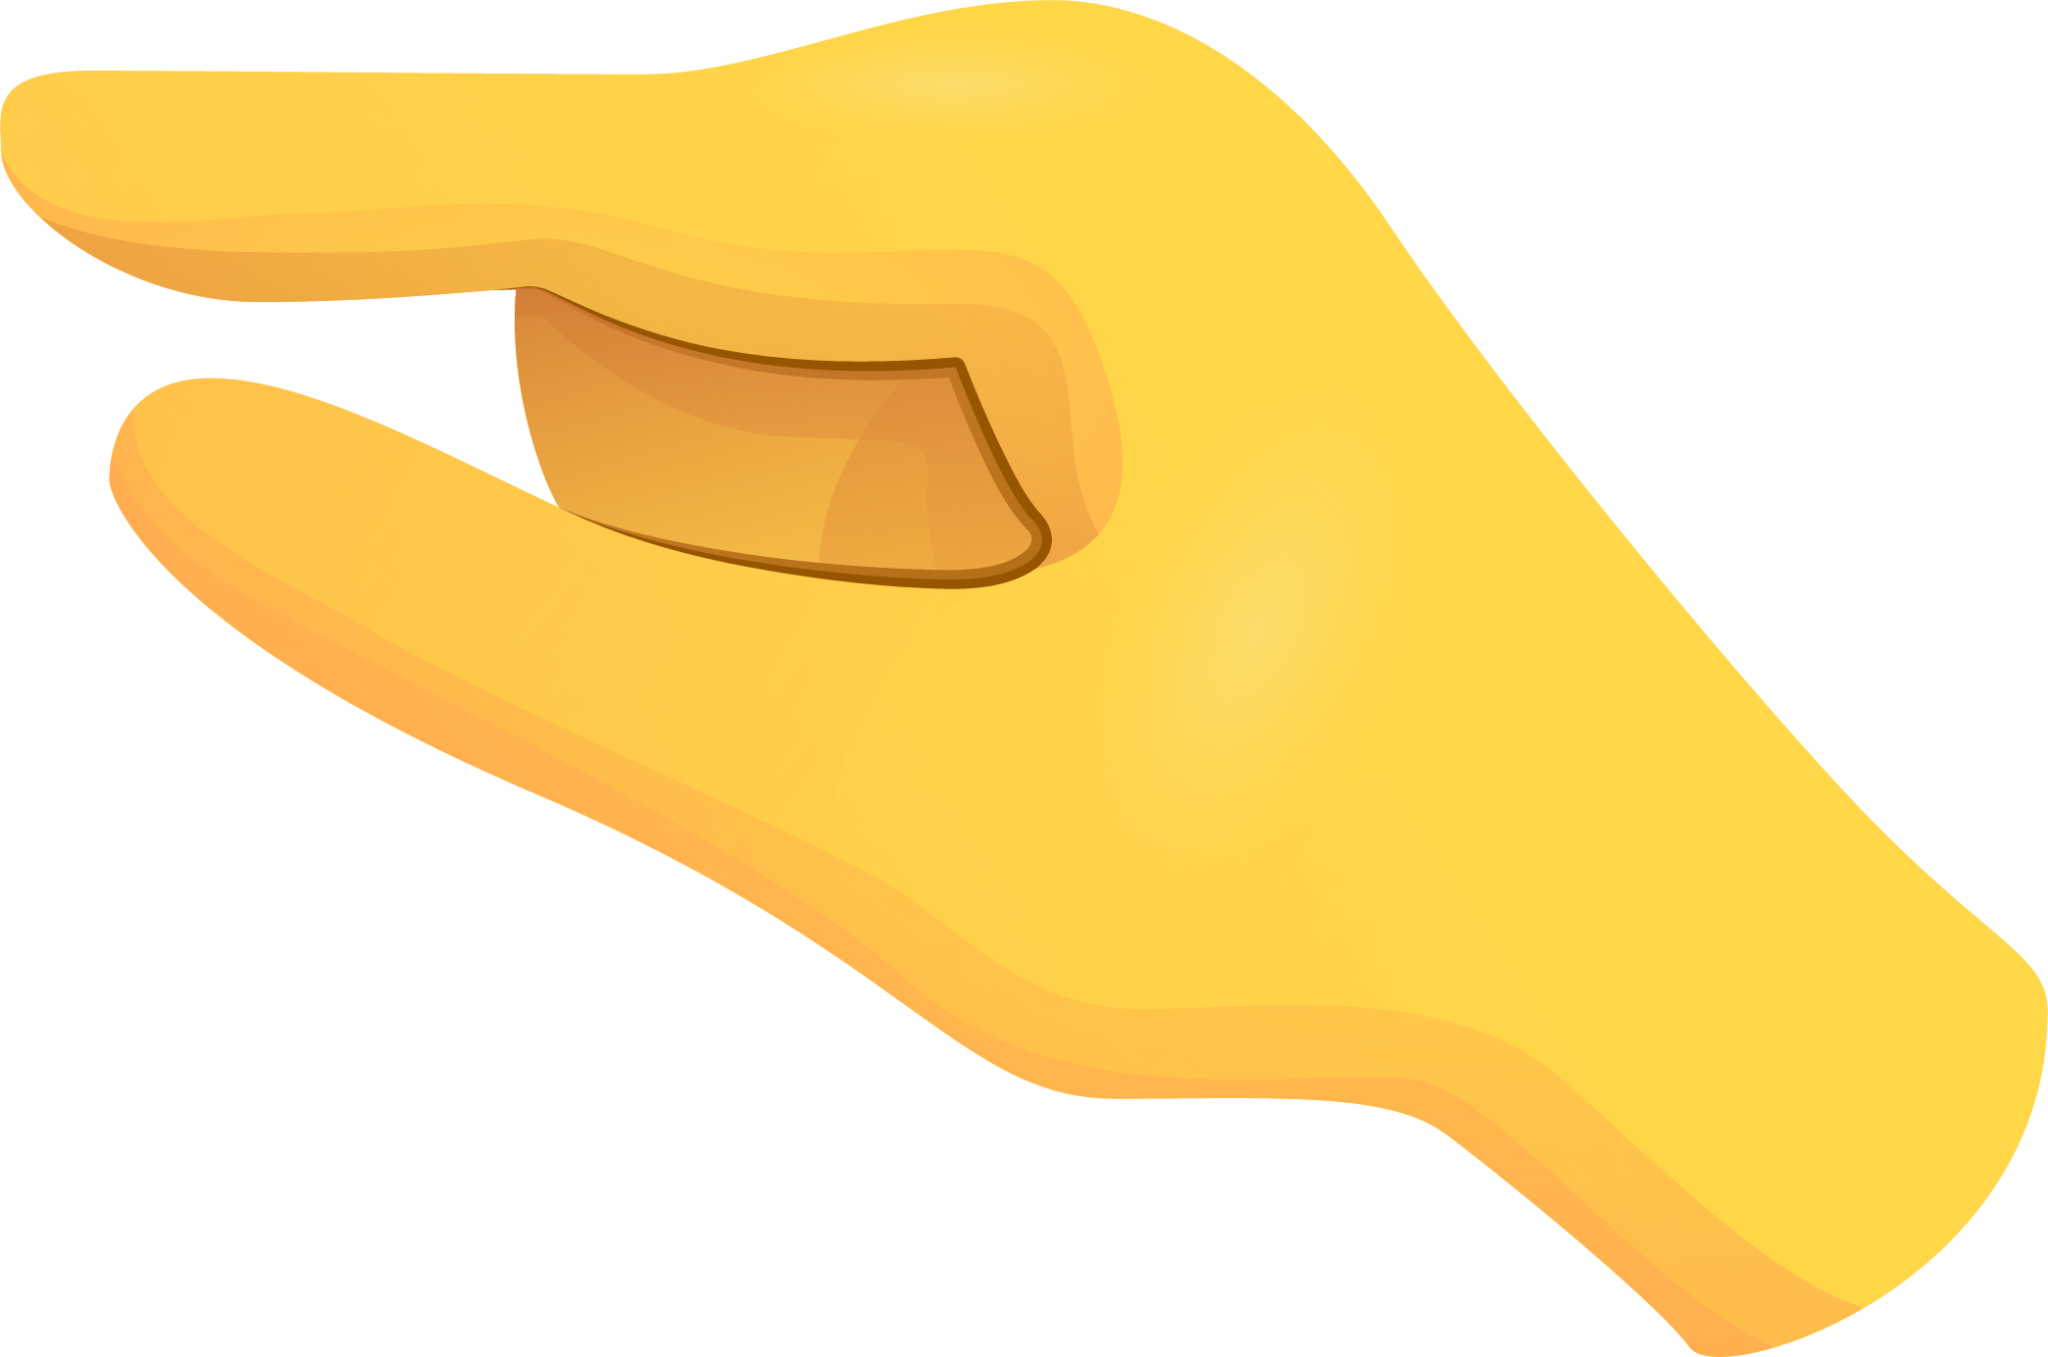 Pinch hand emoji emoji